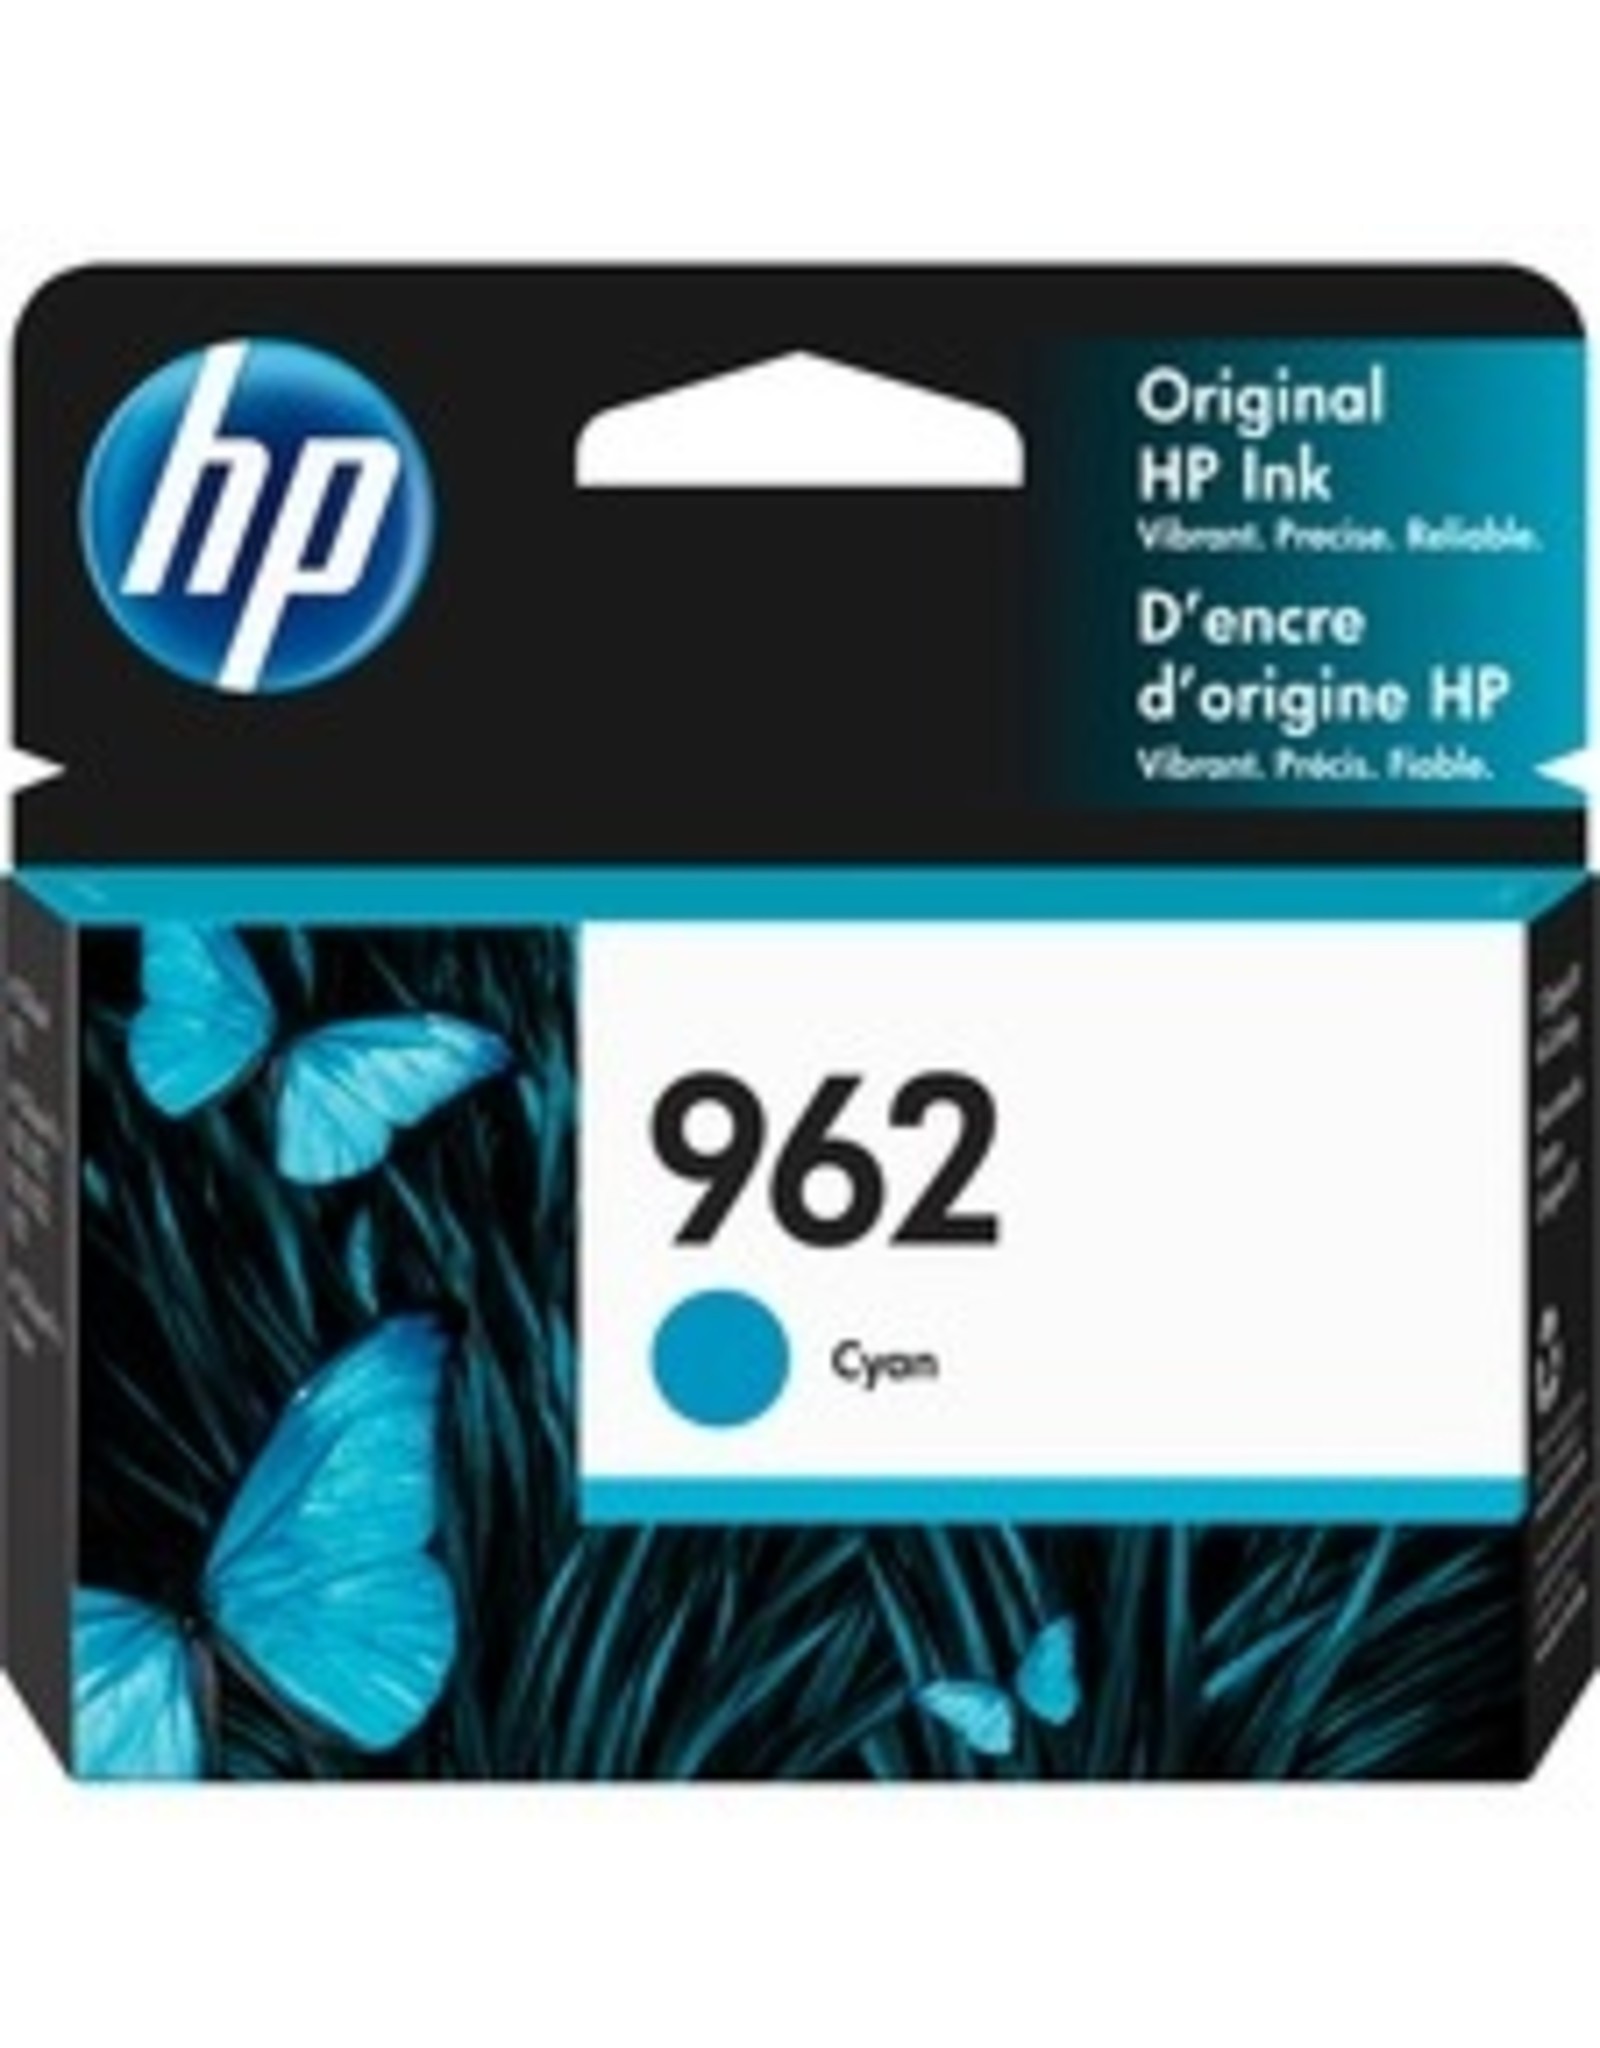 HP HP 962 Original Ink Cartridge - Cyan